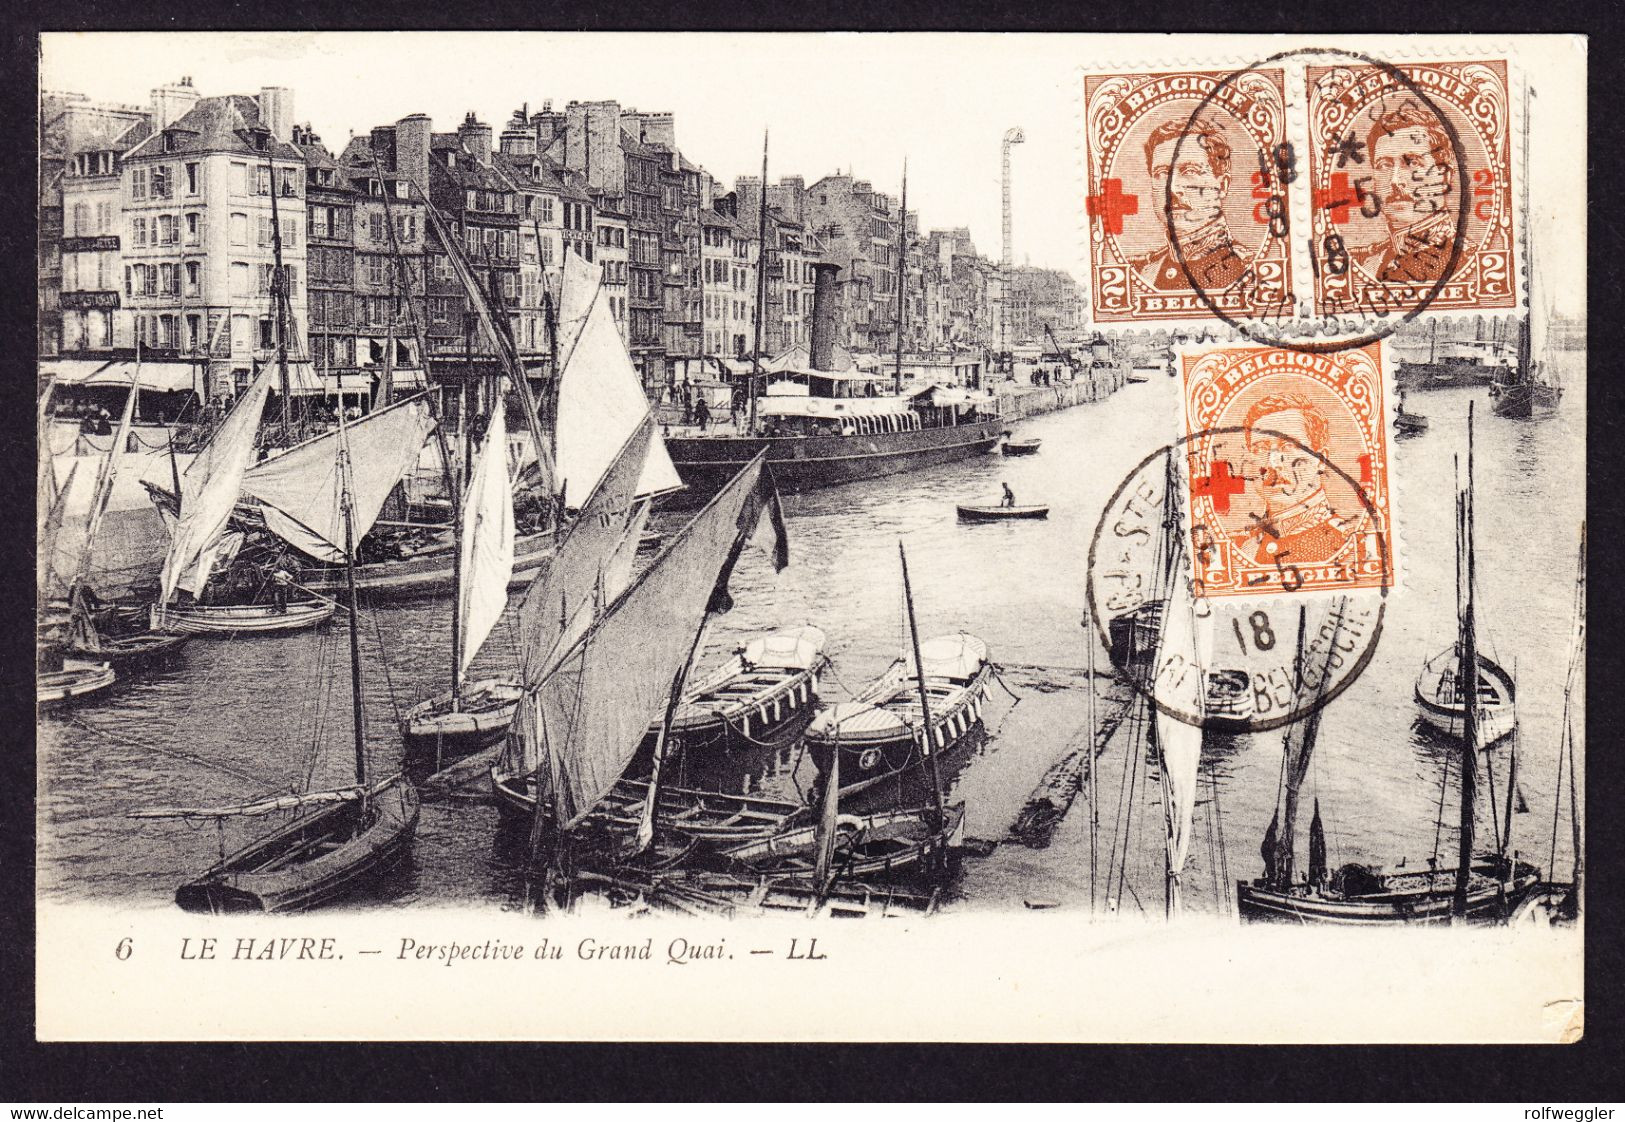 1918  3 Werte Gestempelt Auf Ungelaufener AK, Grand  Quai, Le Havre. - 1918 Red Cross